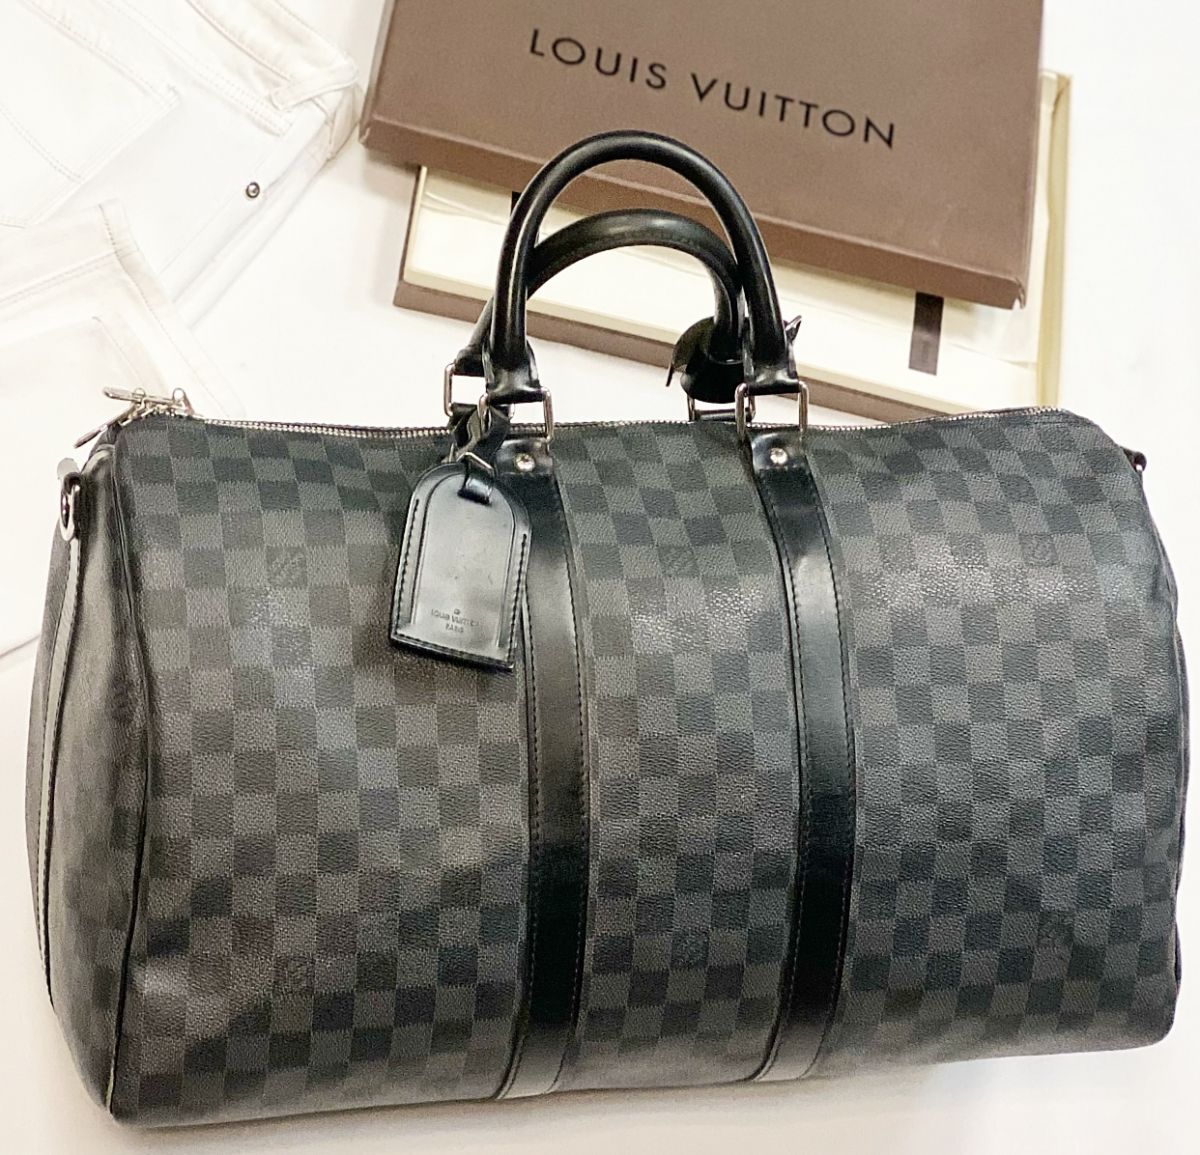 Сумка Louis Vuitton размер 45/30 цена 38 463 руб 